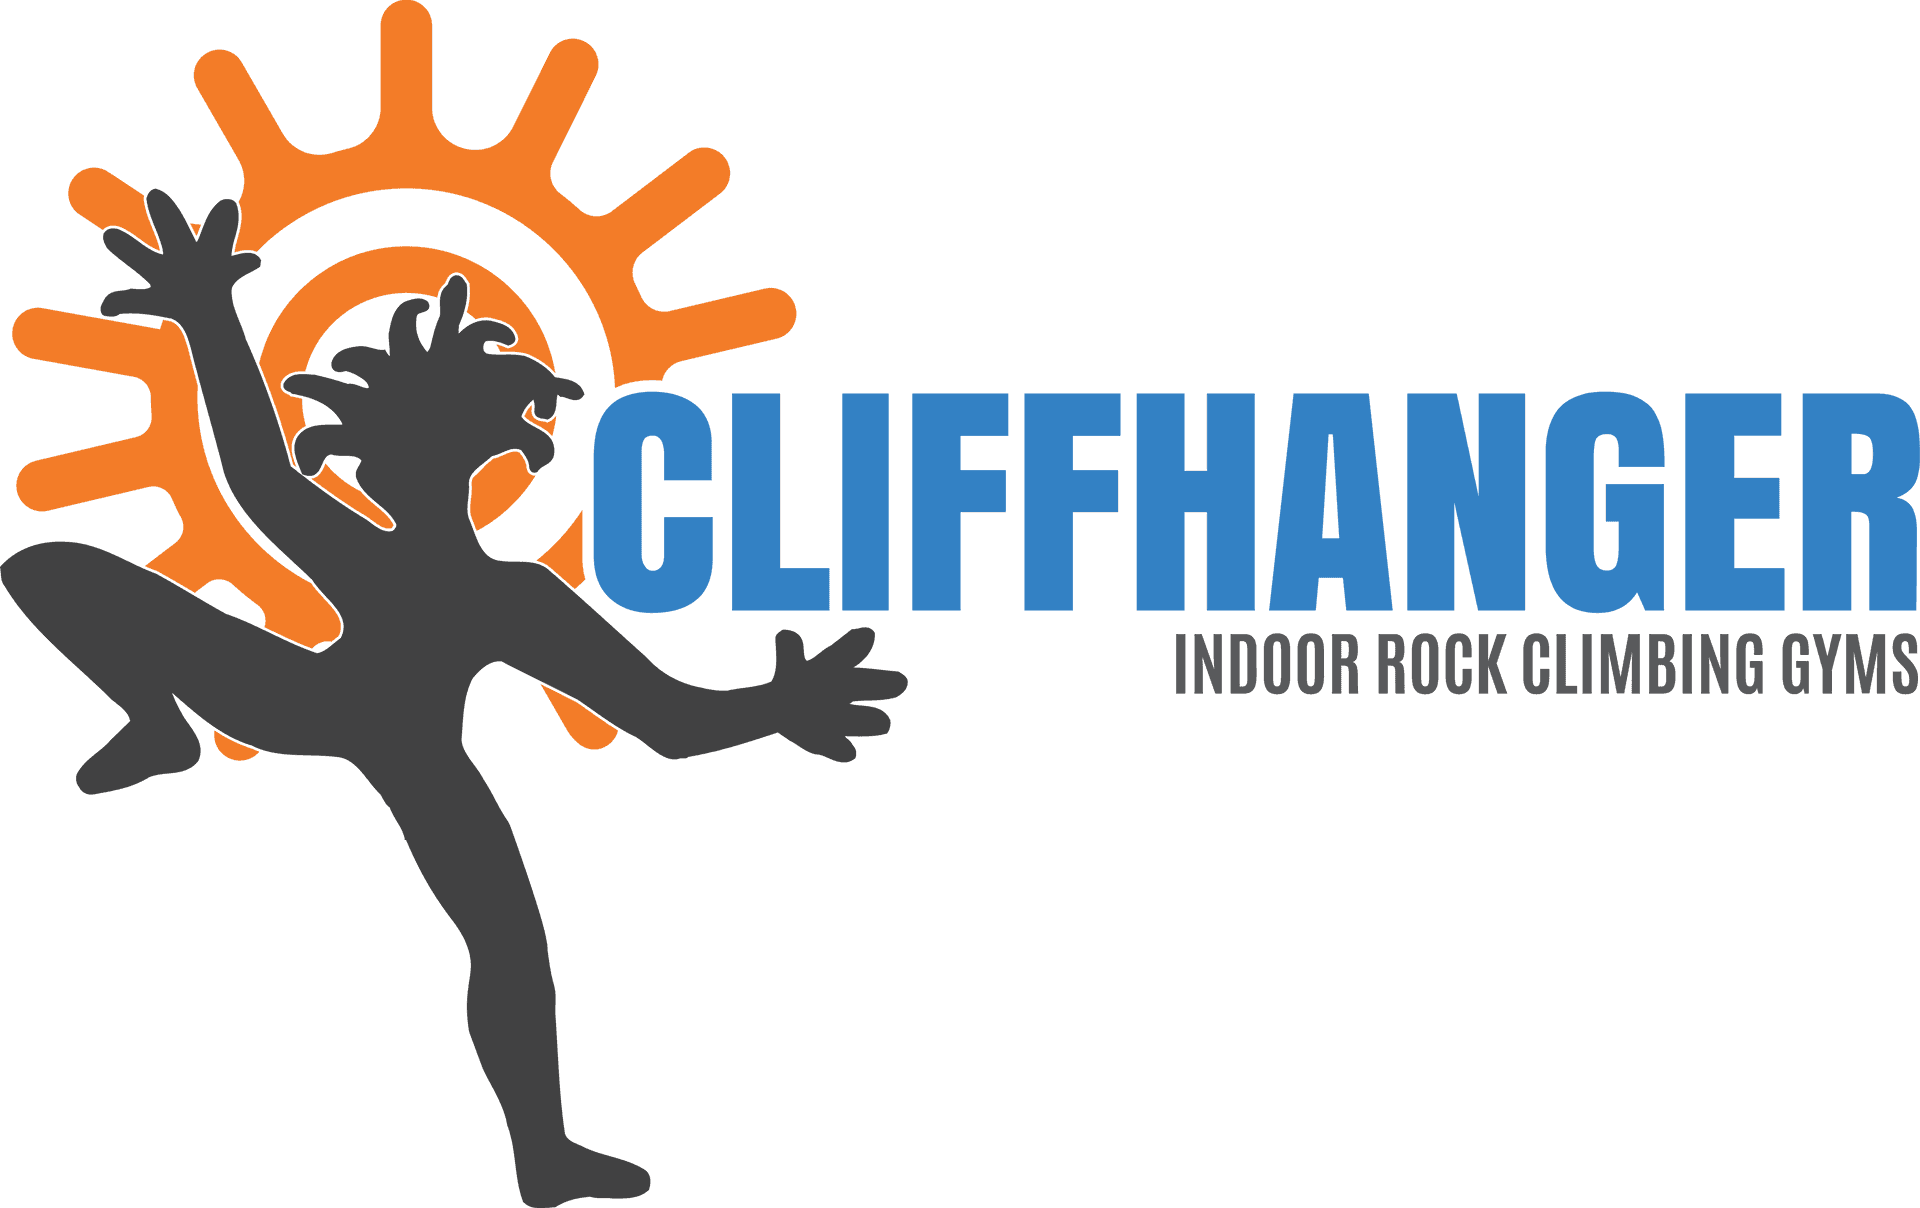 Cliffhanger Indoor Rock Climbing Gym Logo PNG image